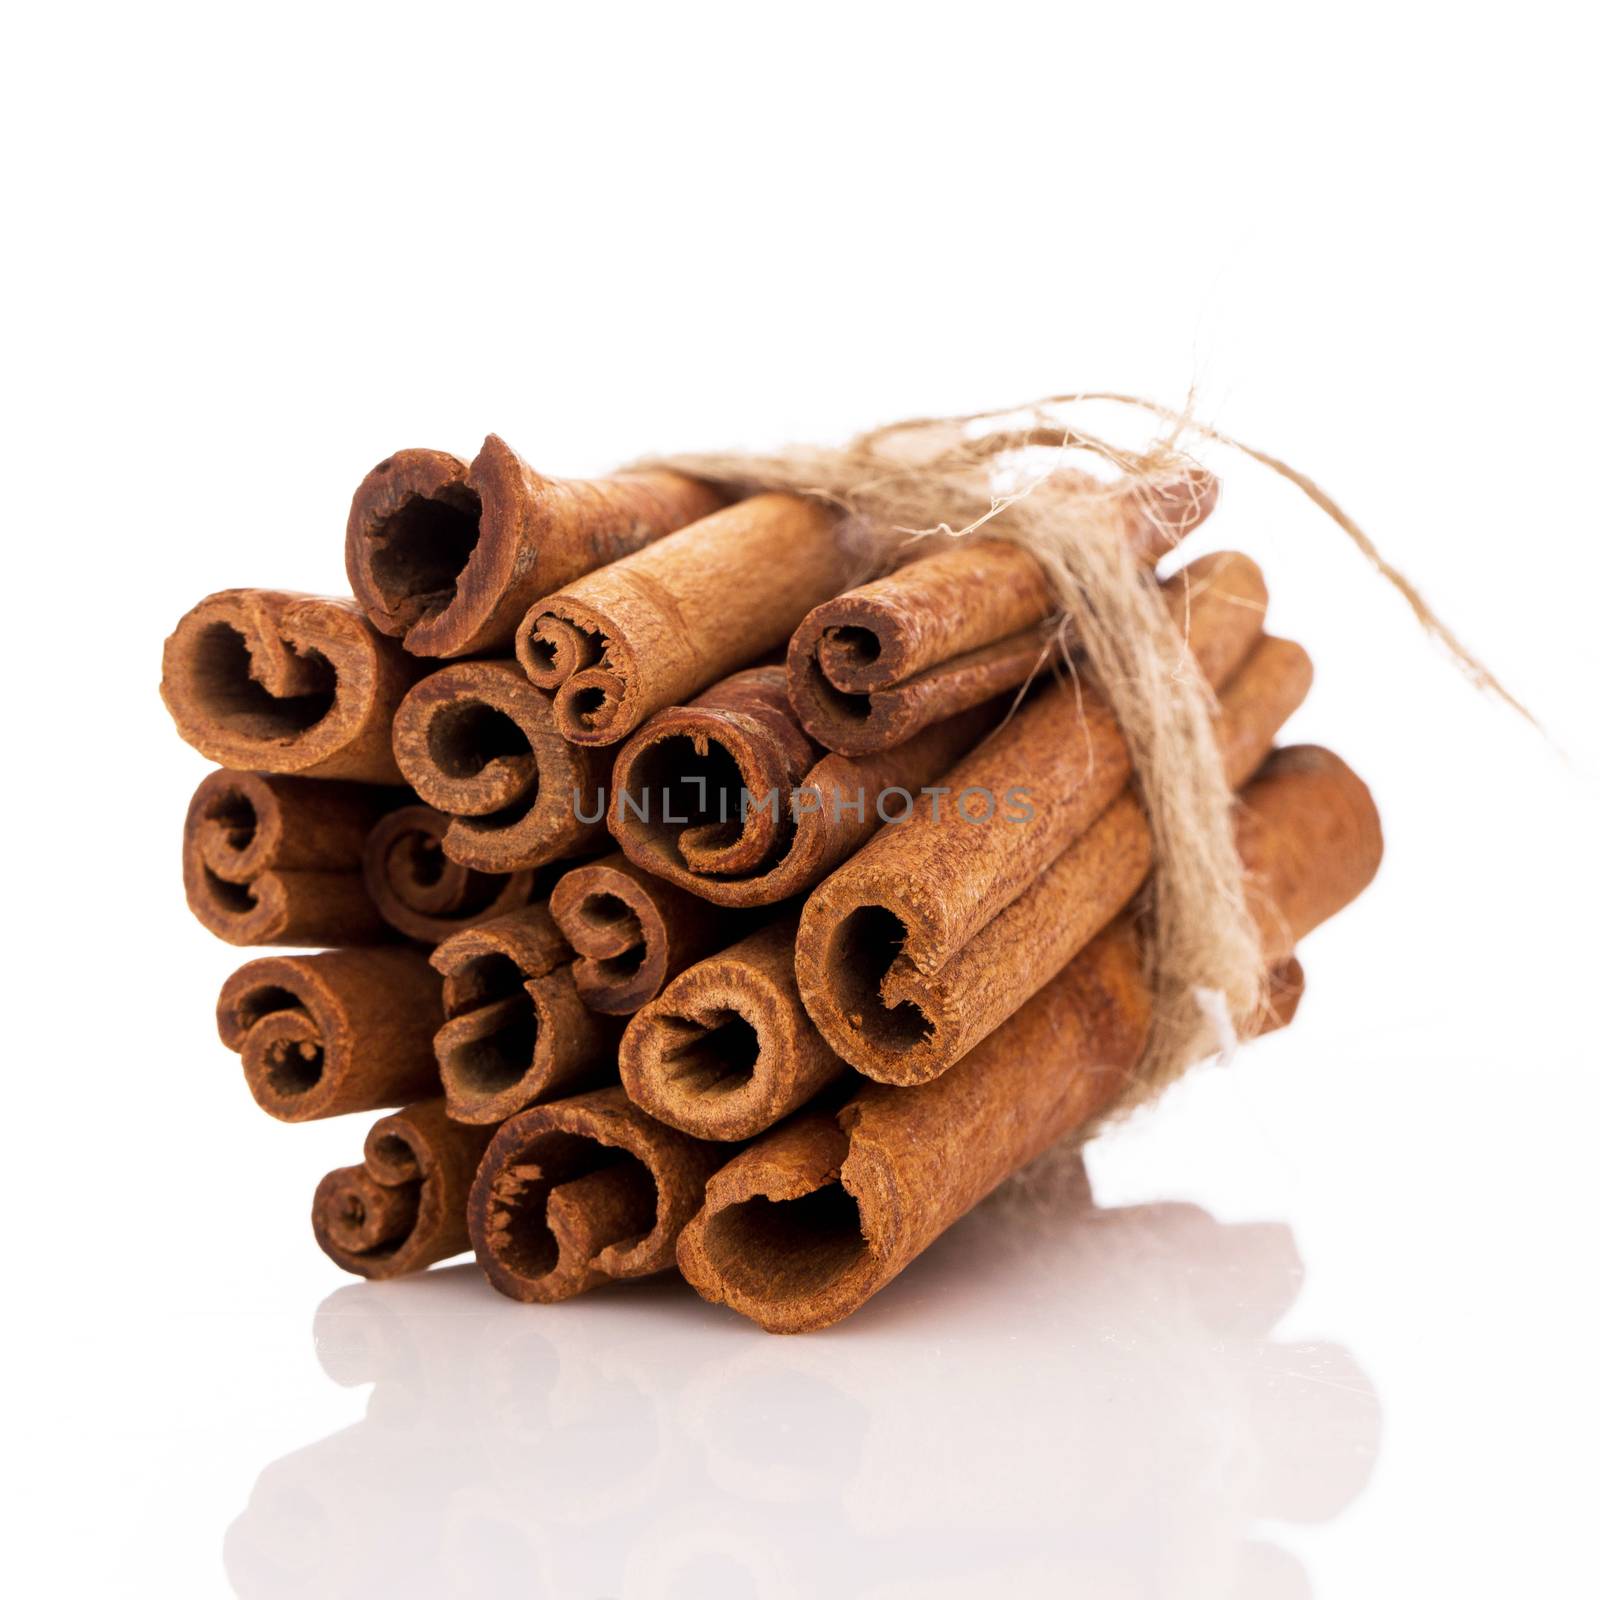 Stack of cinnamon by rufatjumali